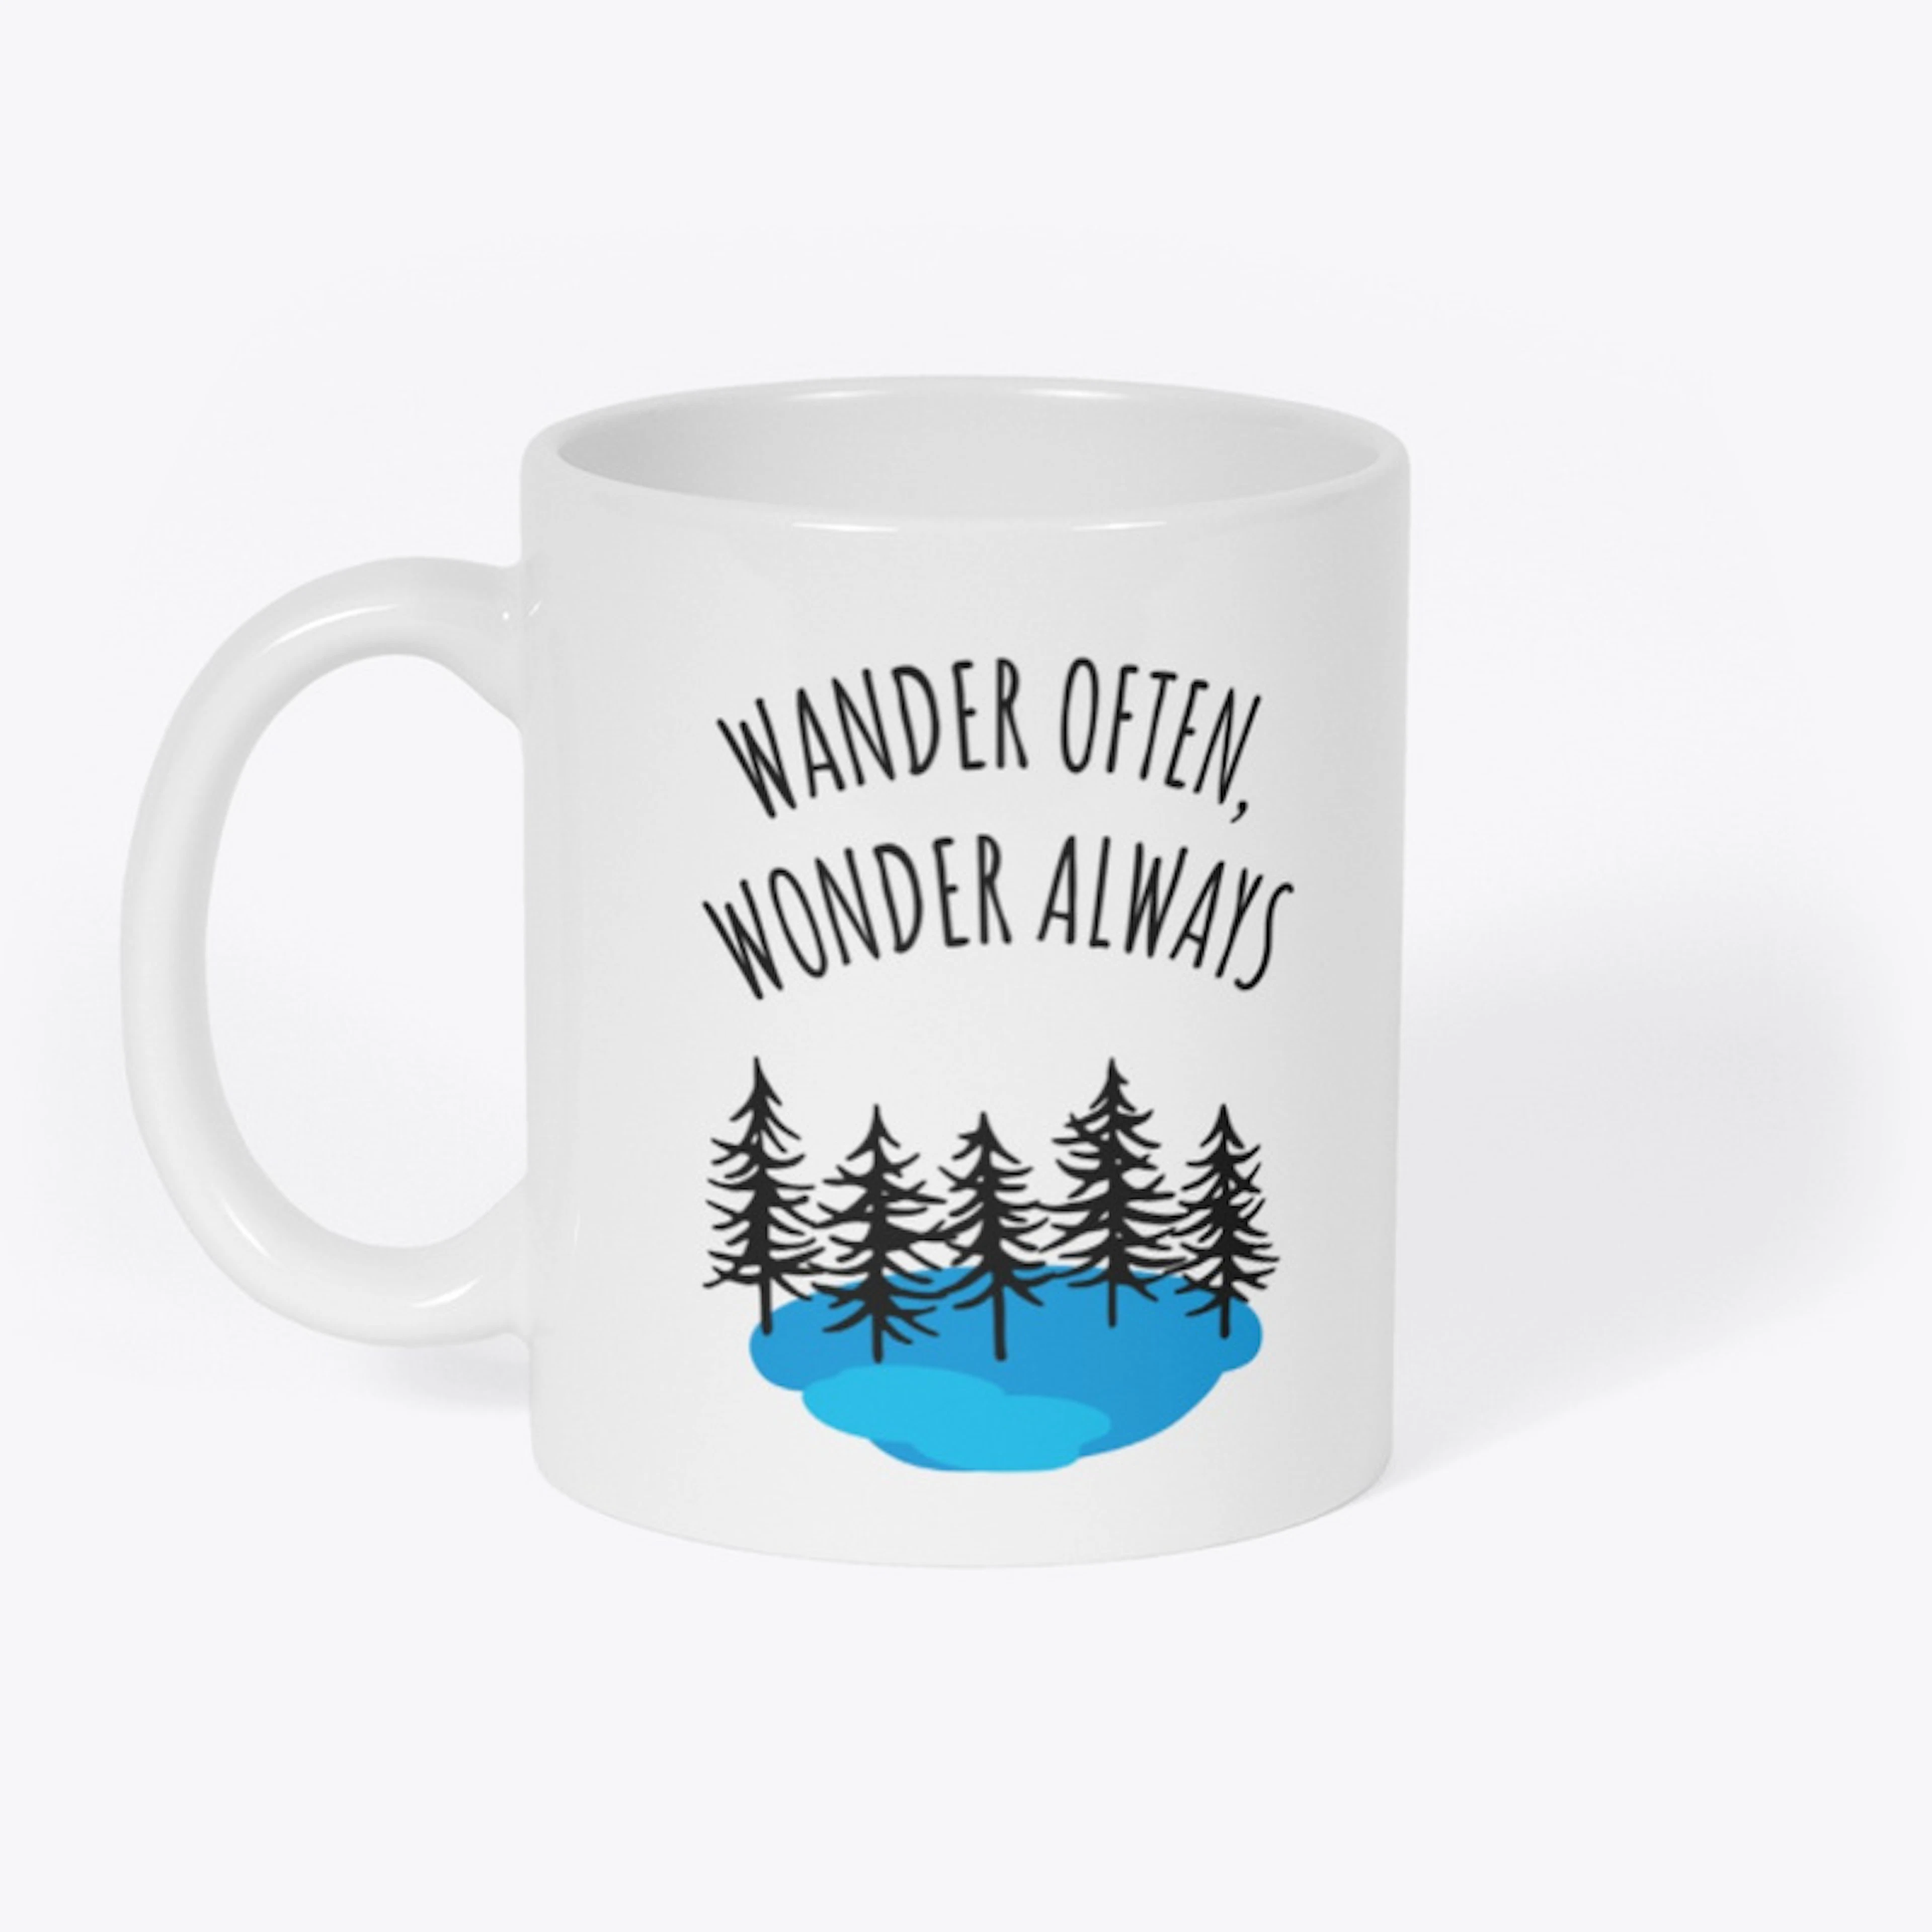 Wander Often Wonder Always Mug